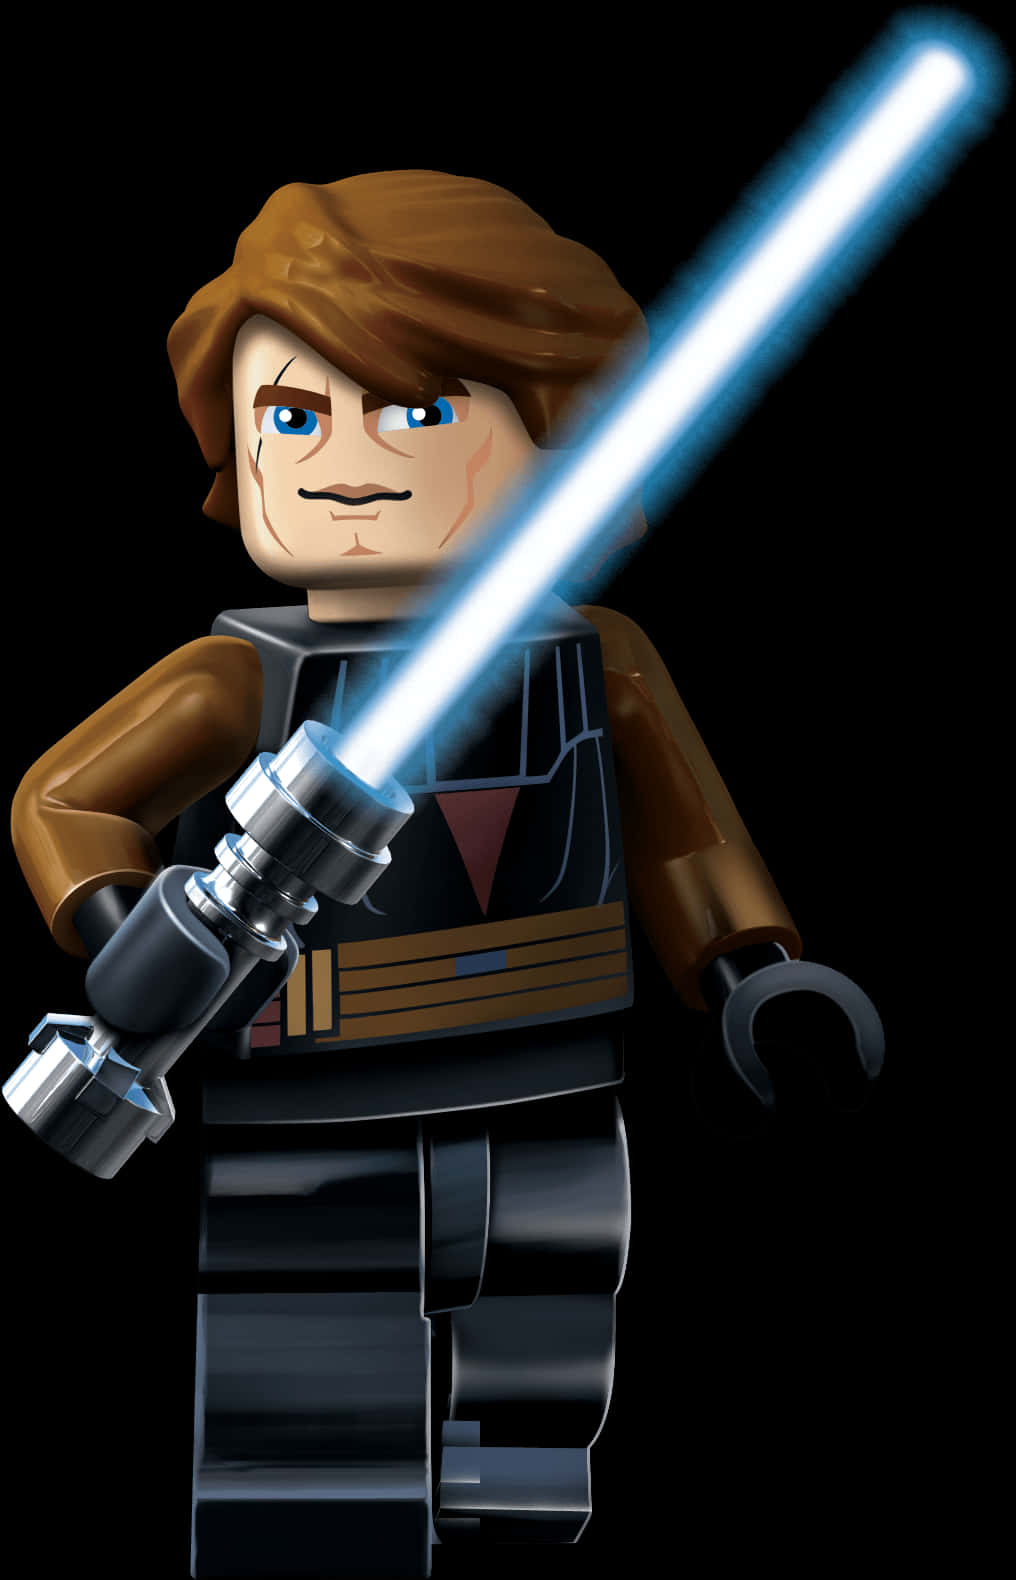 Lego Jediwith Lightsaber SVG